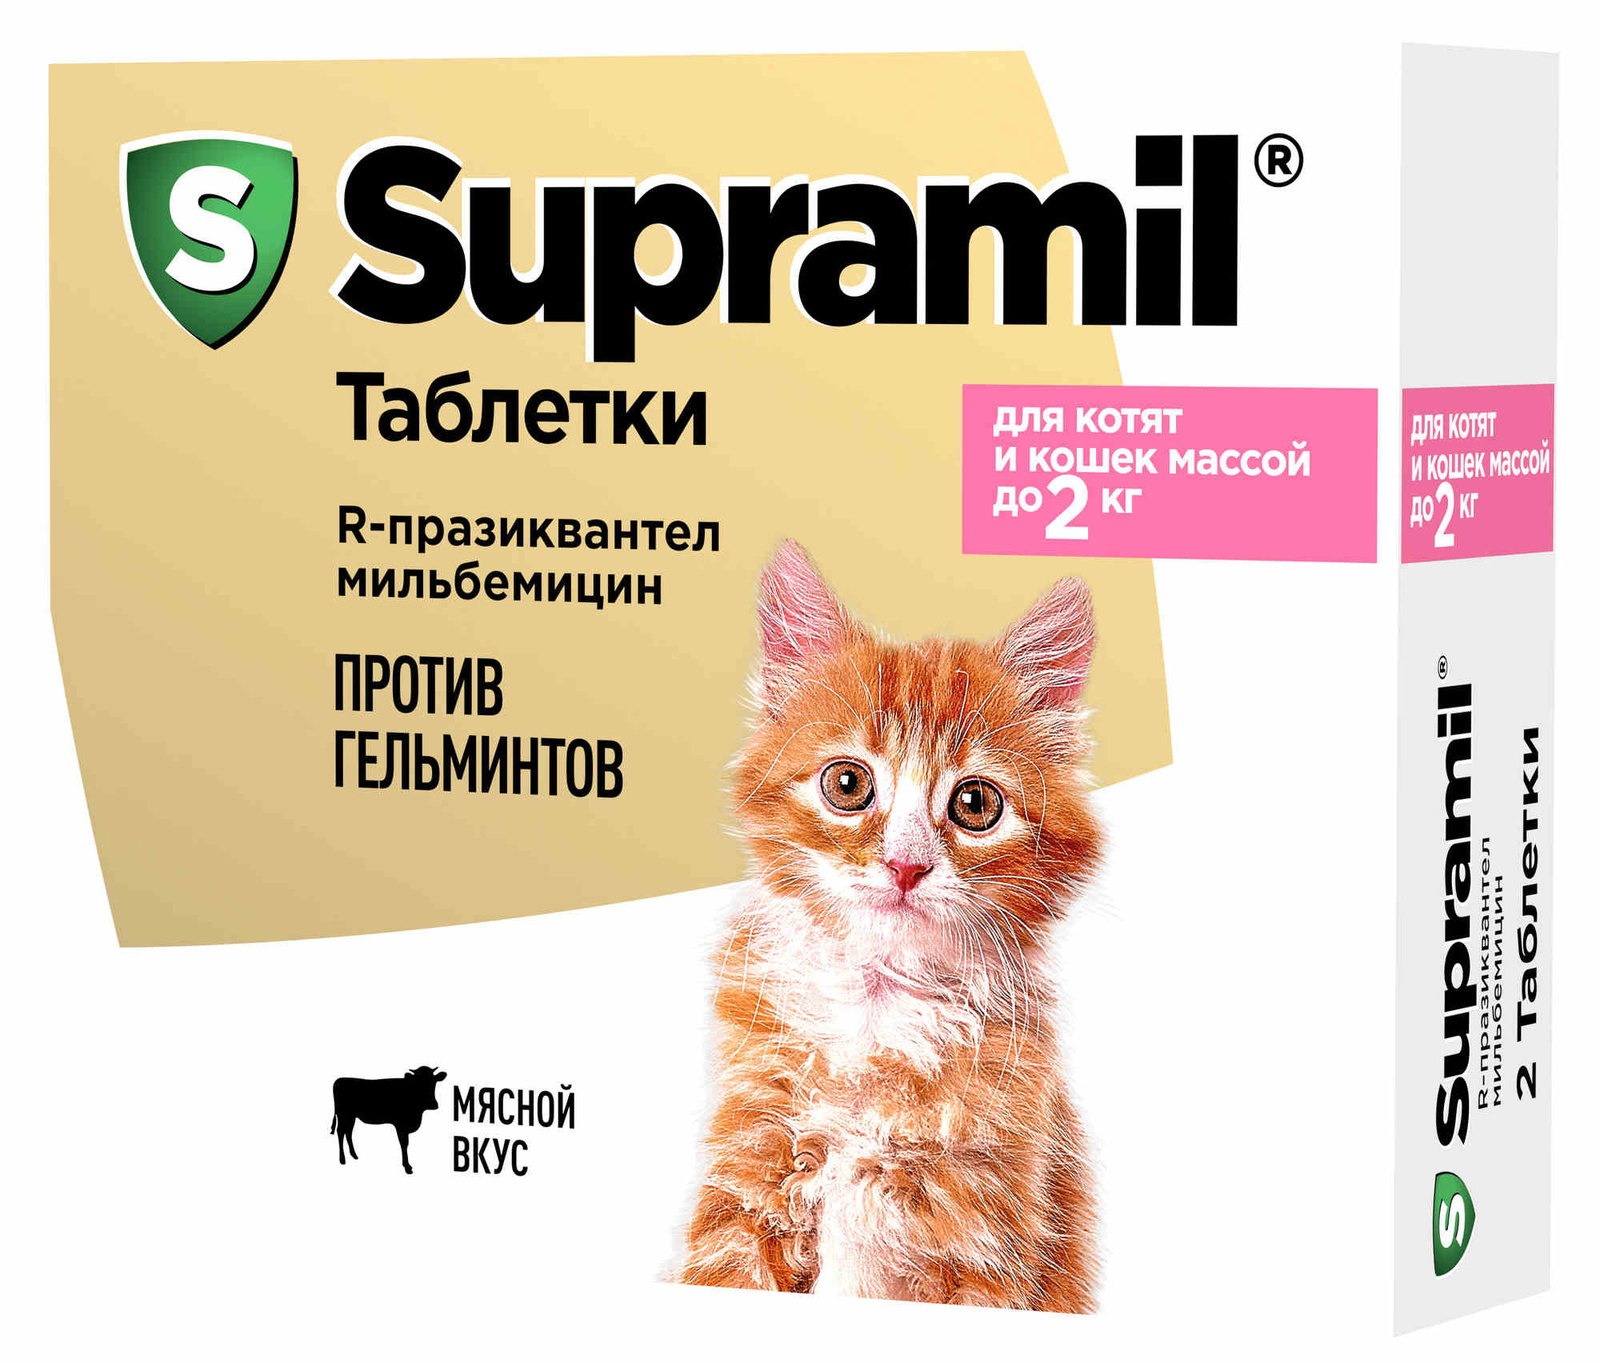 Астрафарм Астрафарм антигельминтный препарат Supramil для котят и кошек массой до 2 кг (таблетки) (20 г) supramil таблетки для кошек массой от 2кг 2шт